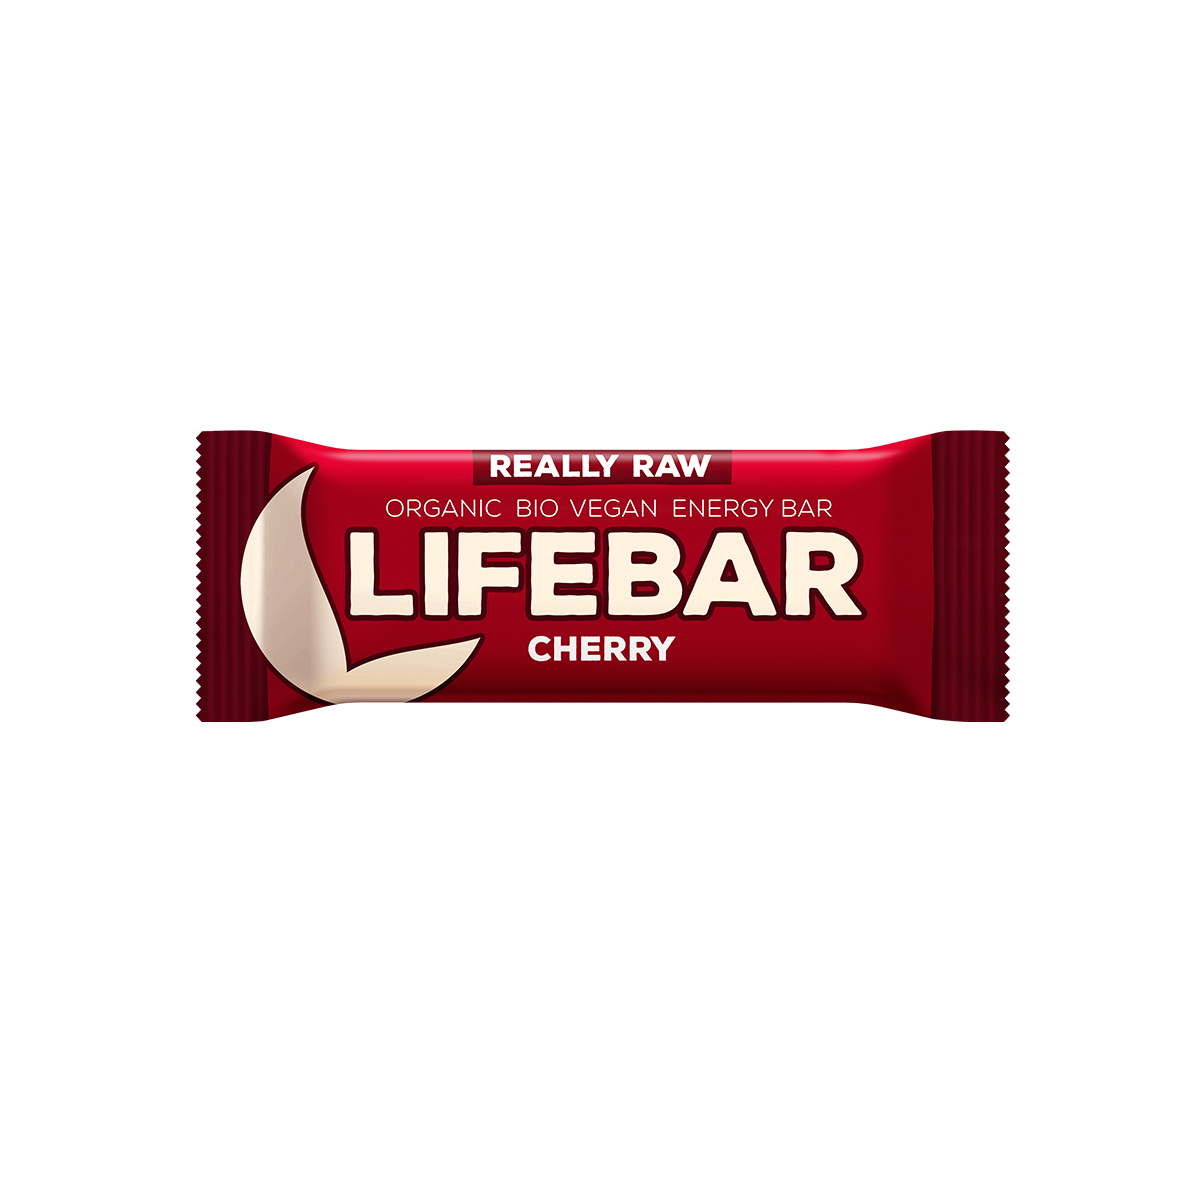 Lifebar cherry